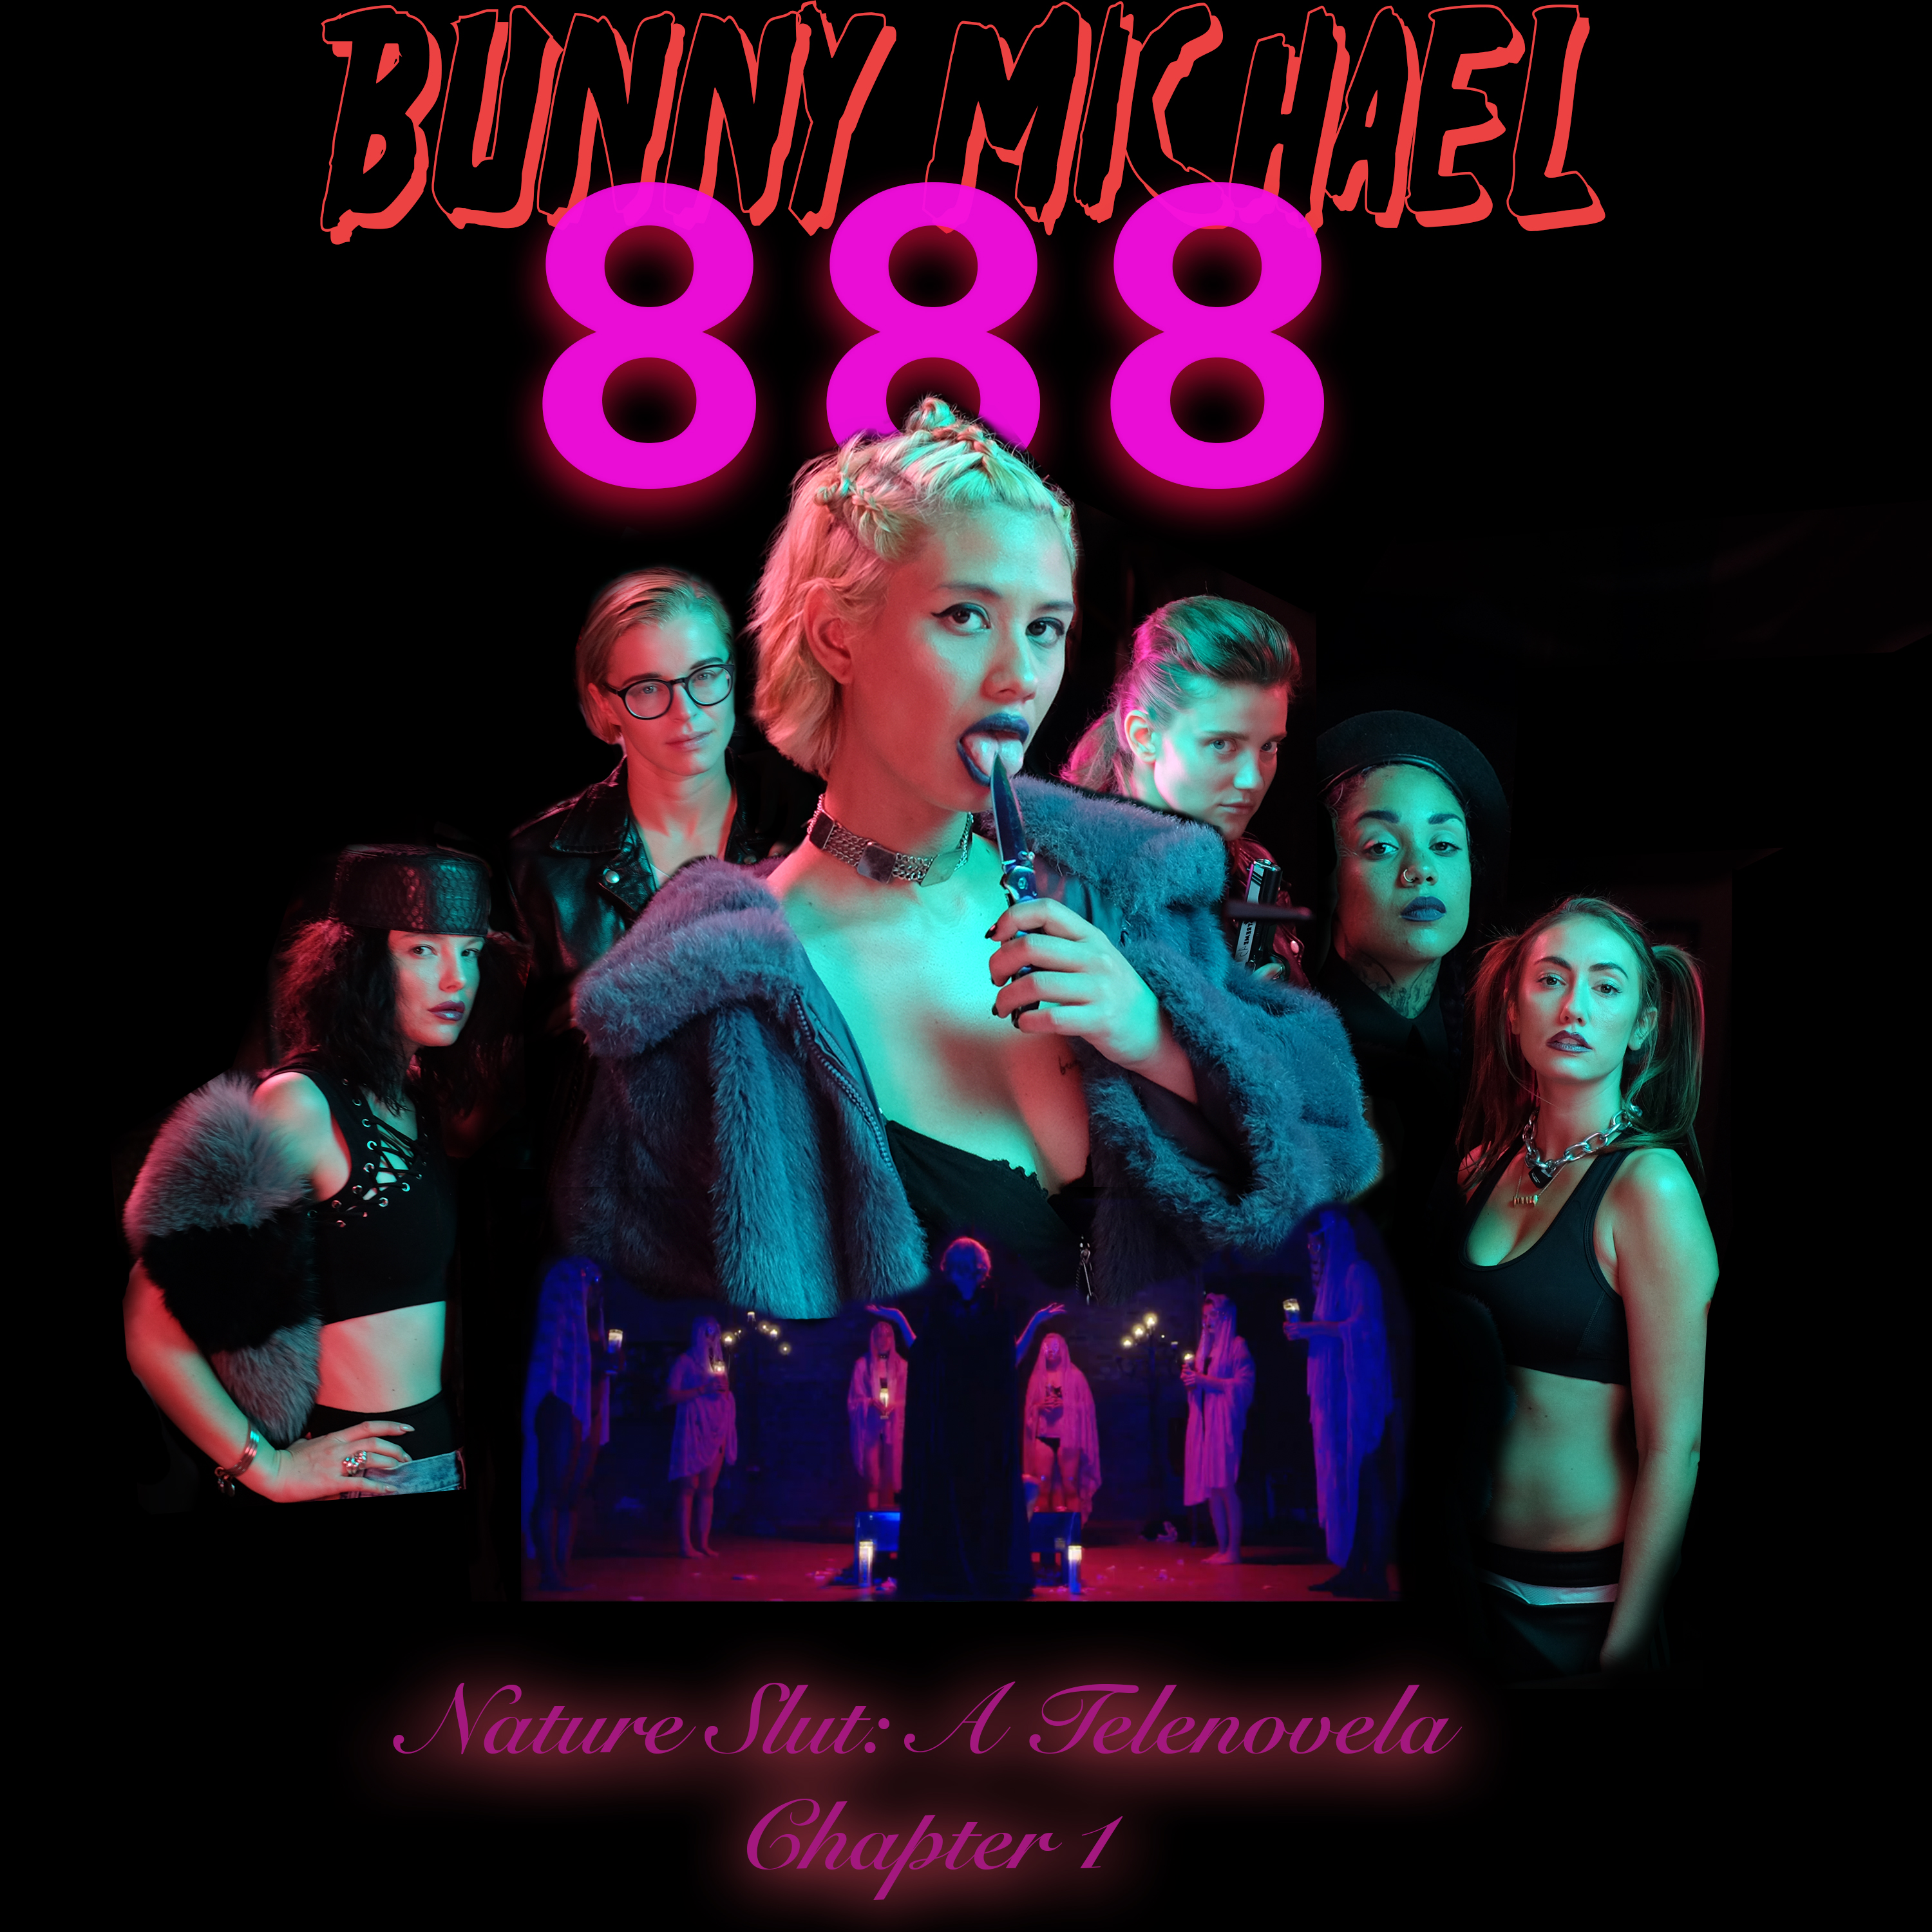 Bunny Michael 888